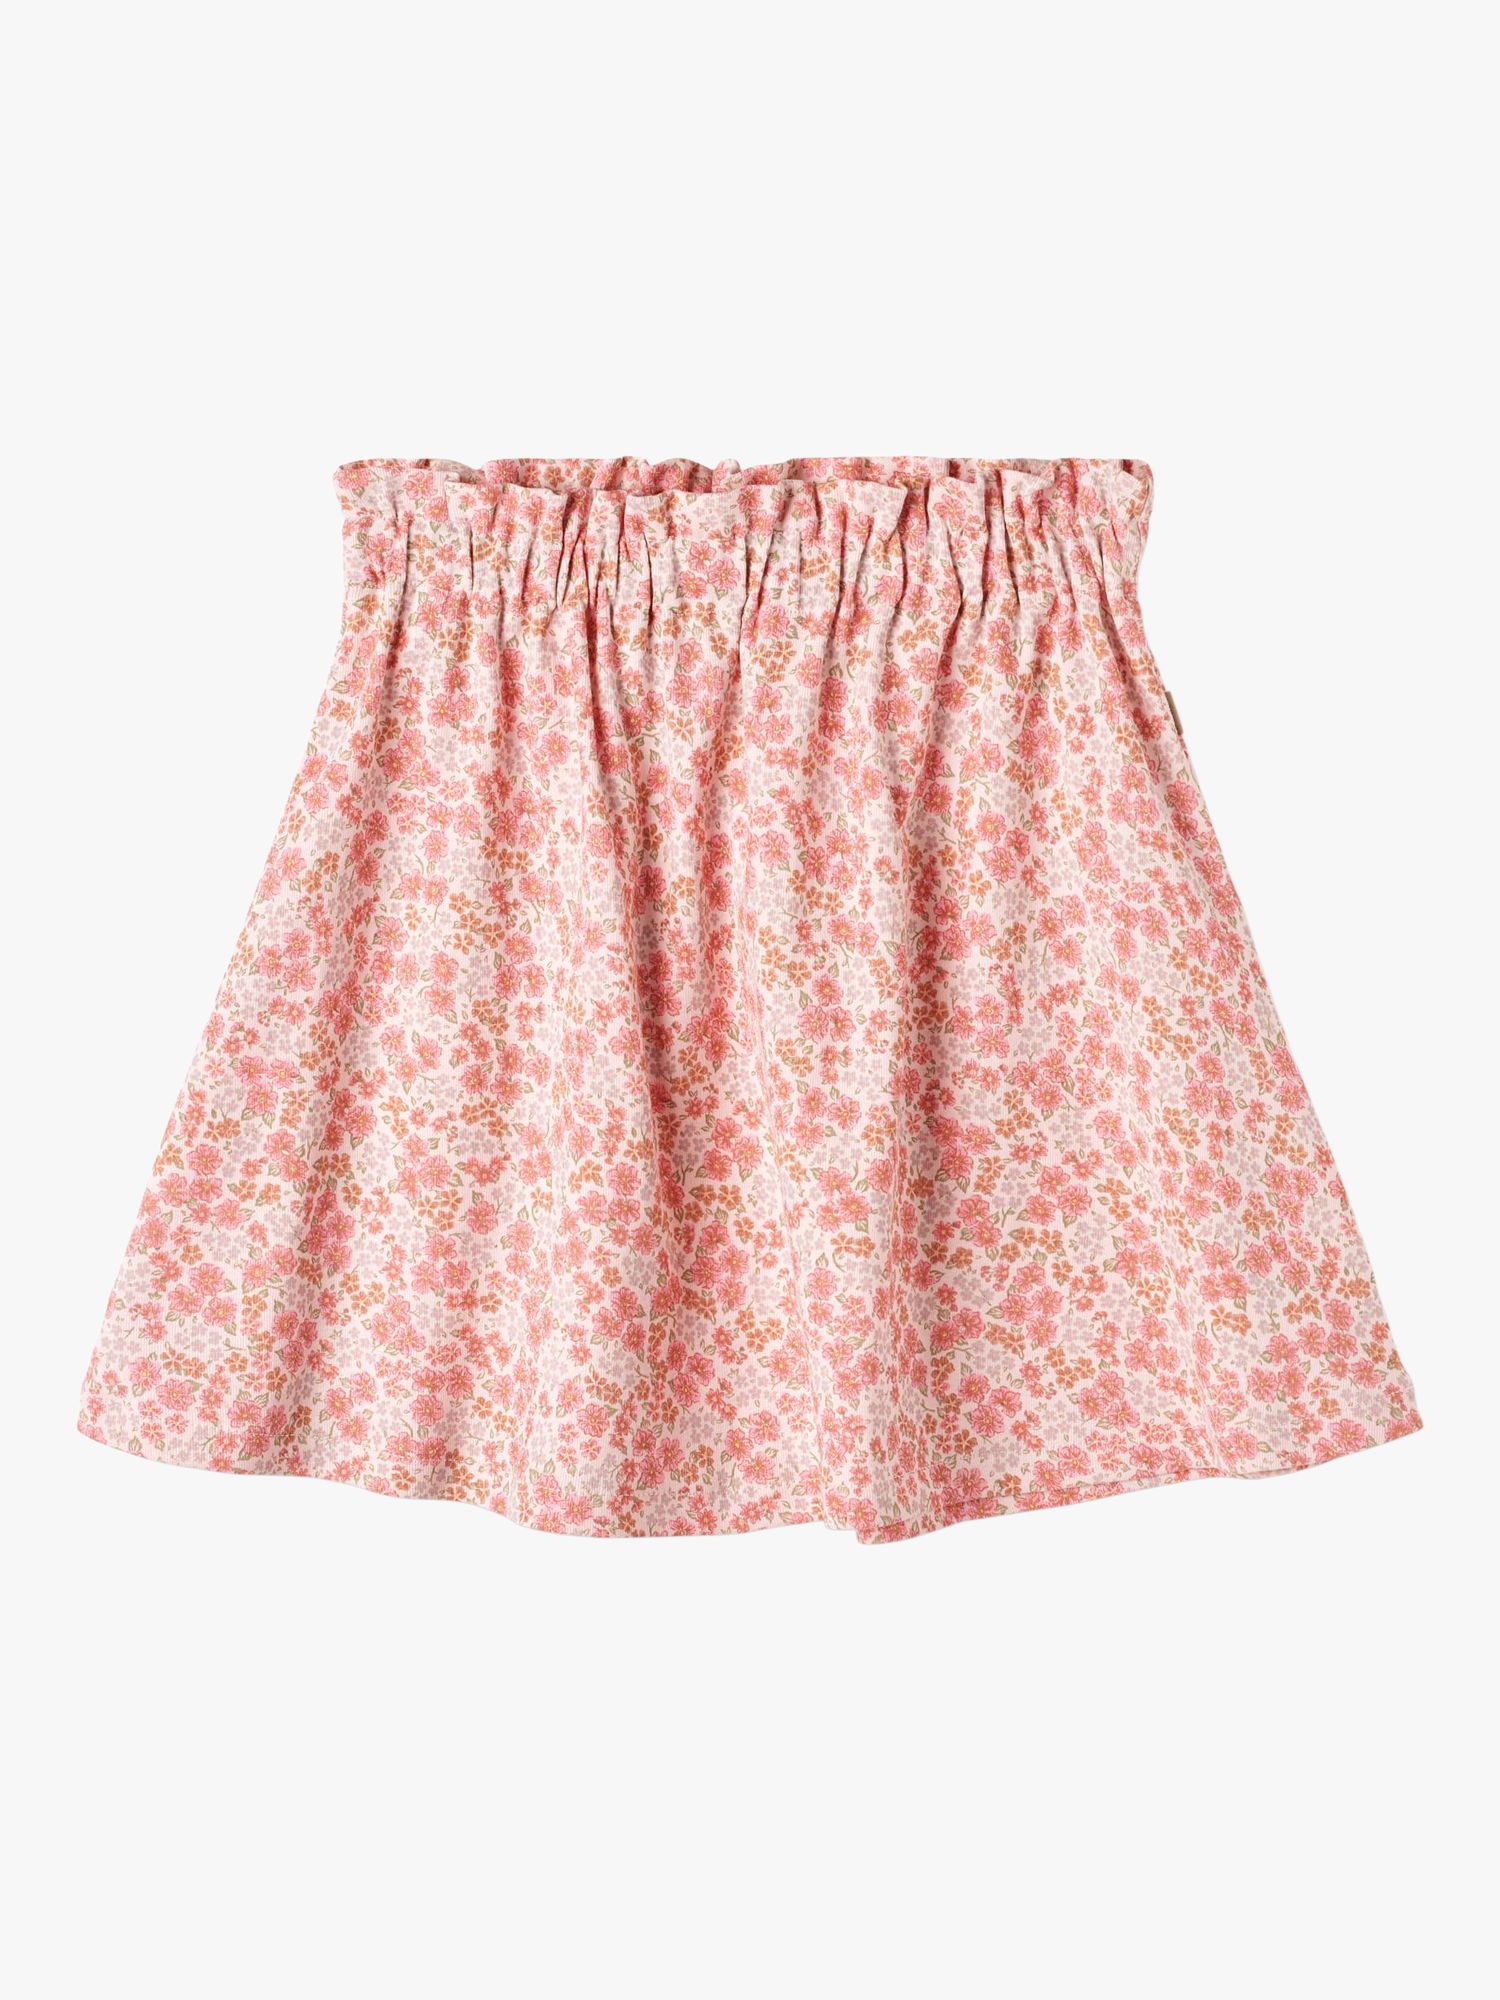 Wheat Kids' Agnetha Organic Cotton Floral Print Skirt, Pink, 3 years